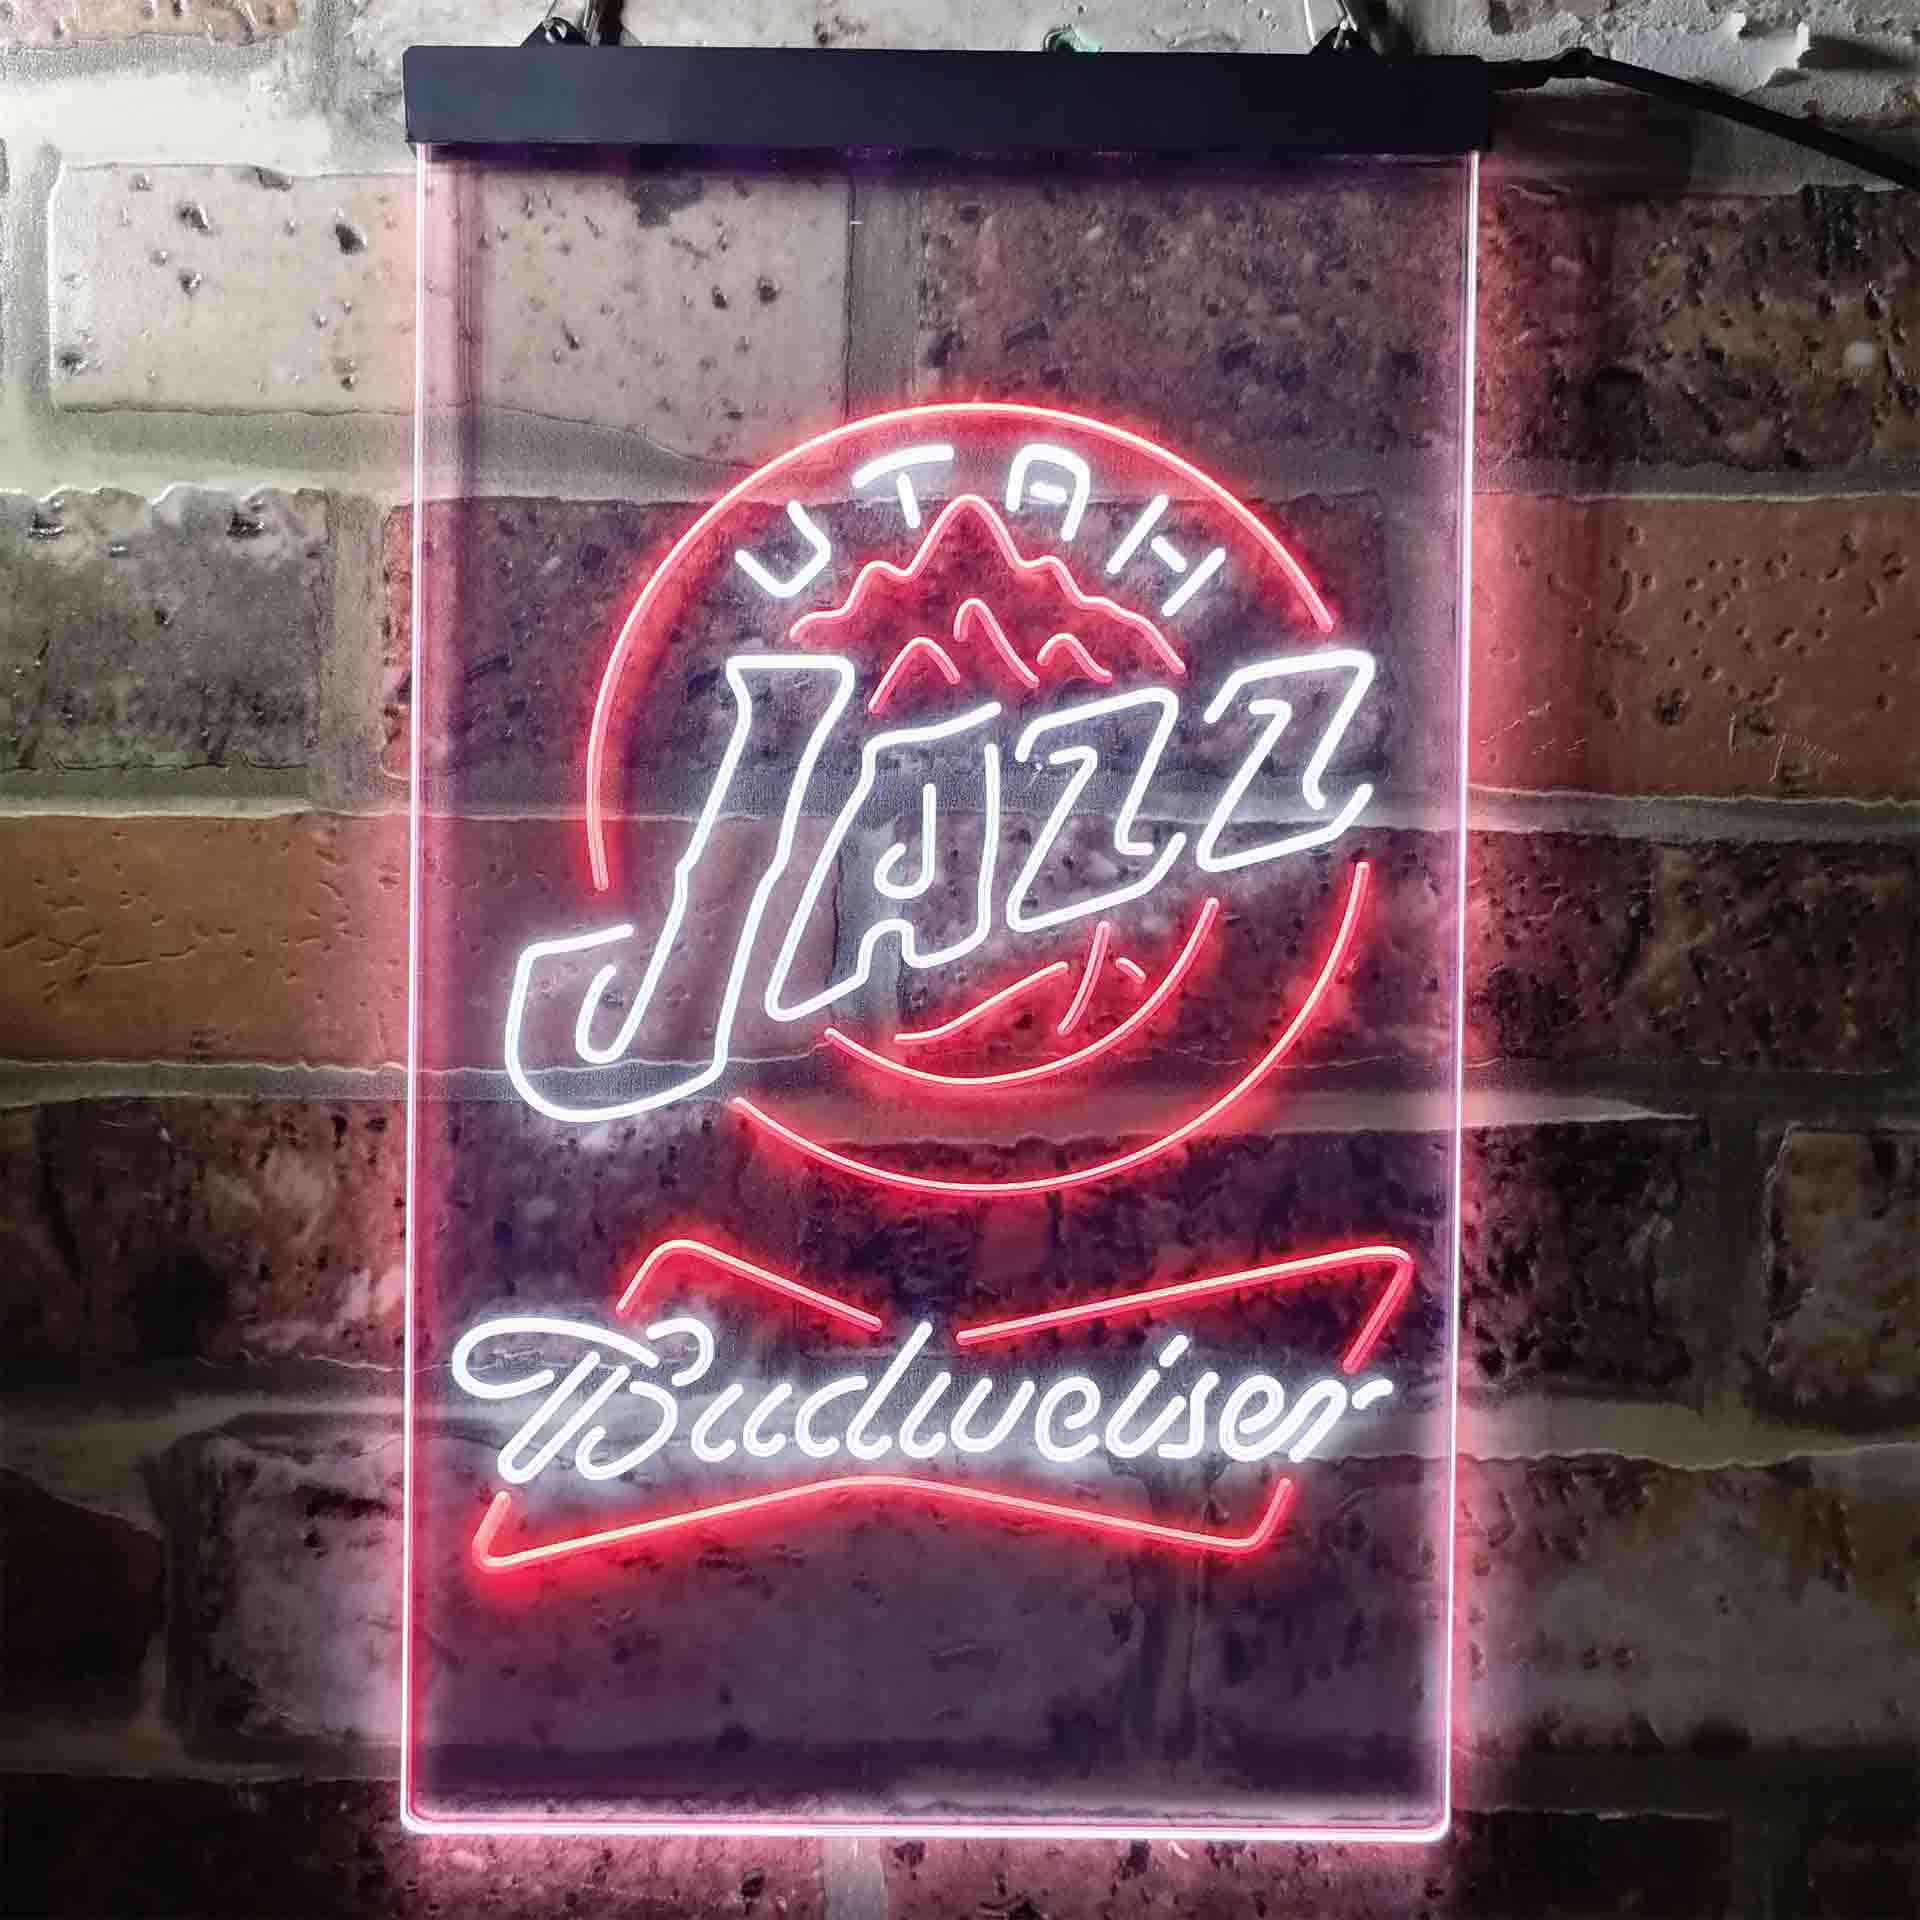 Utah Jazz Budweiser Neon-Like LED Sign